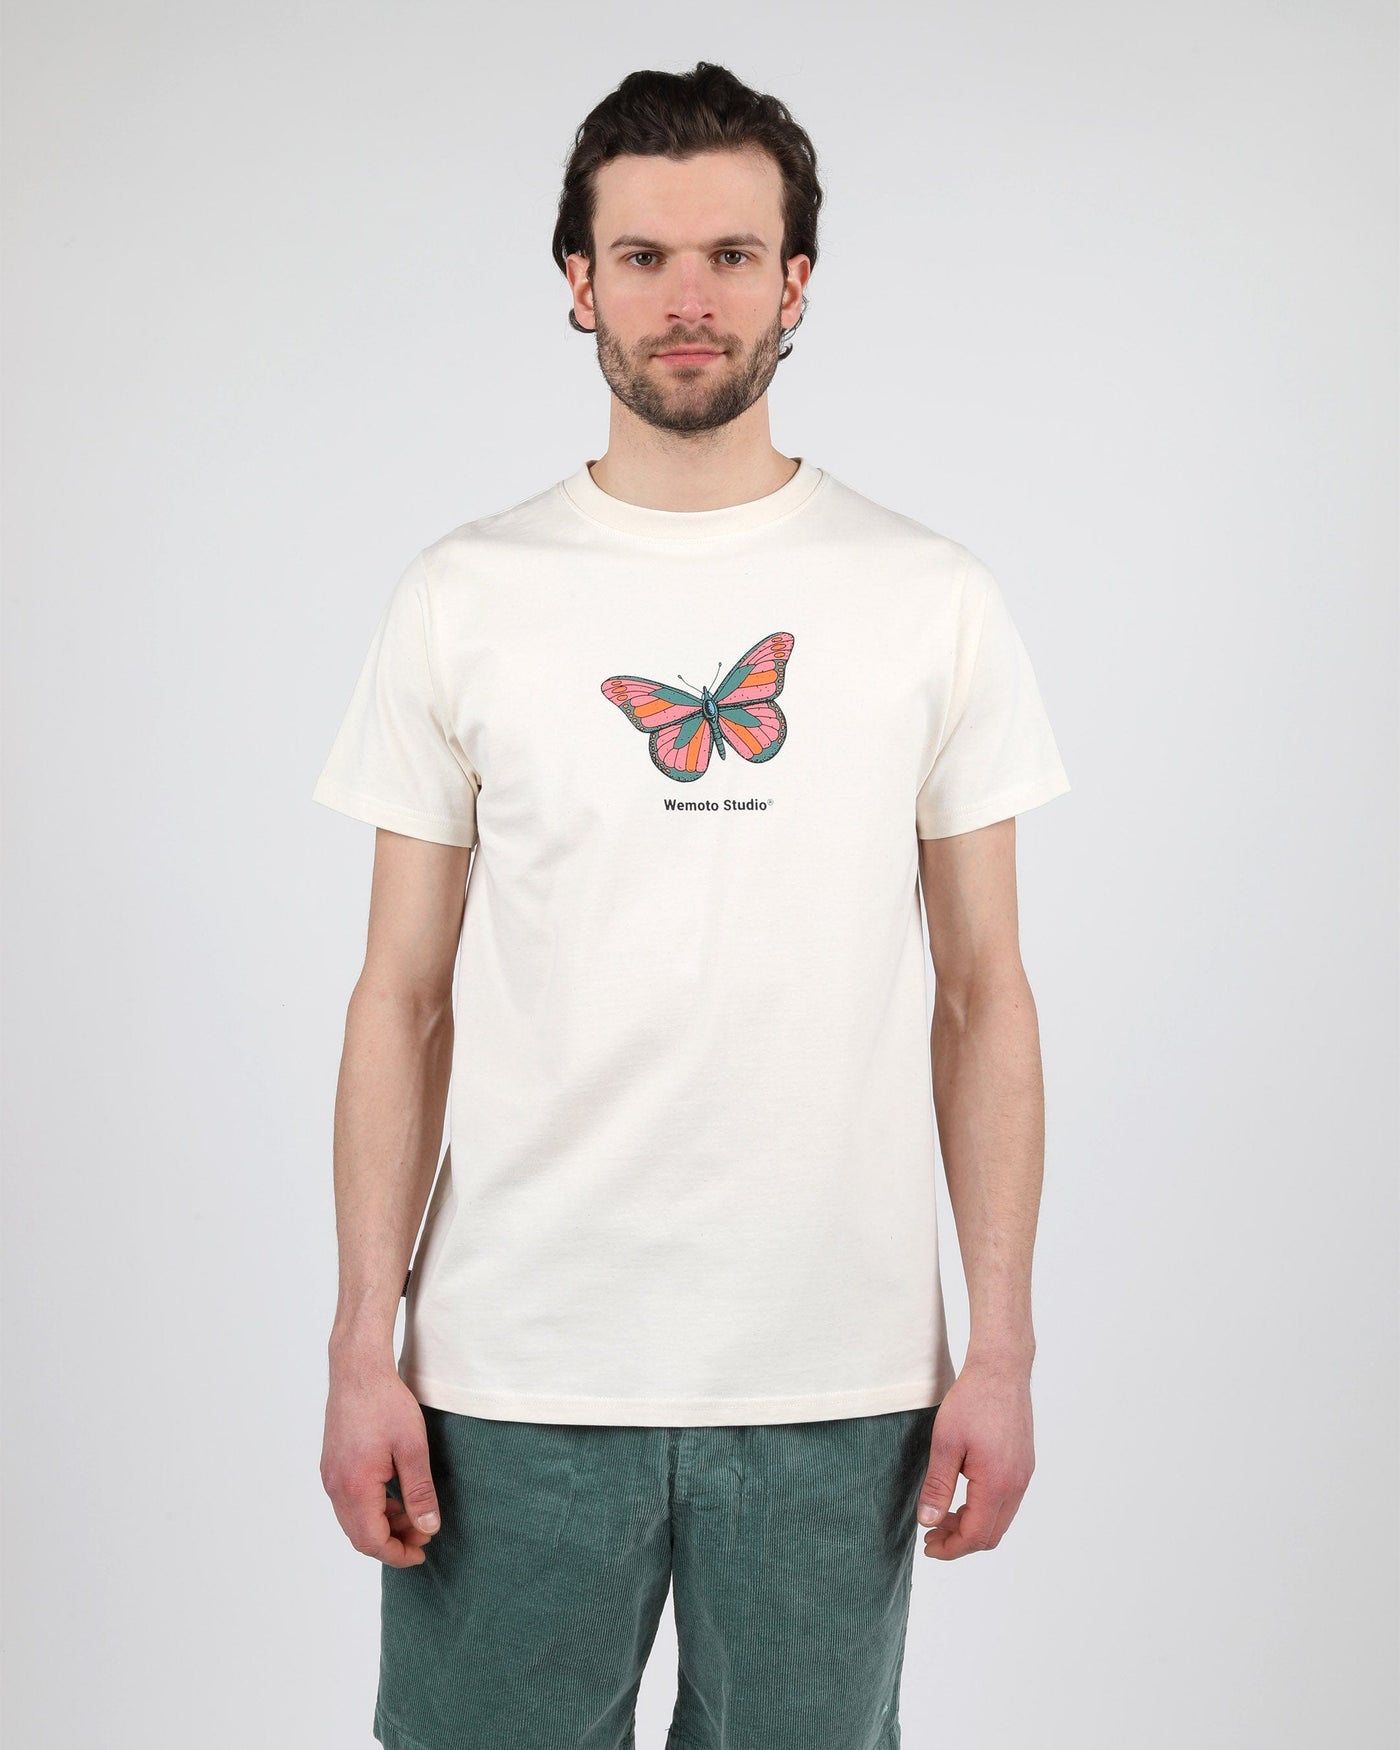 Wemoto T-shirt Butterfly Tee - Printed T-Shirt Natural